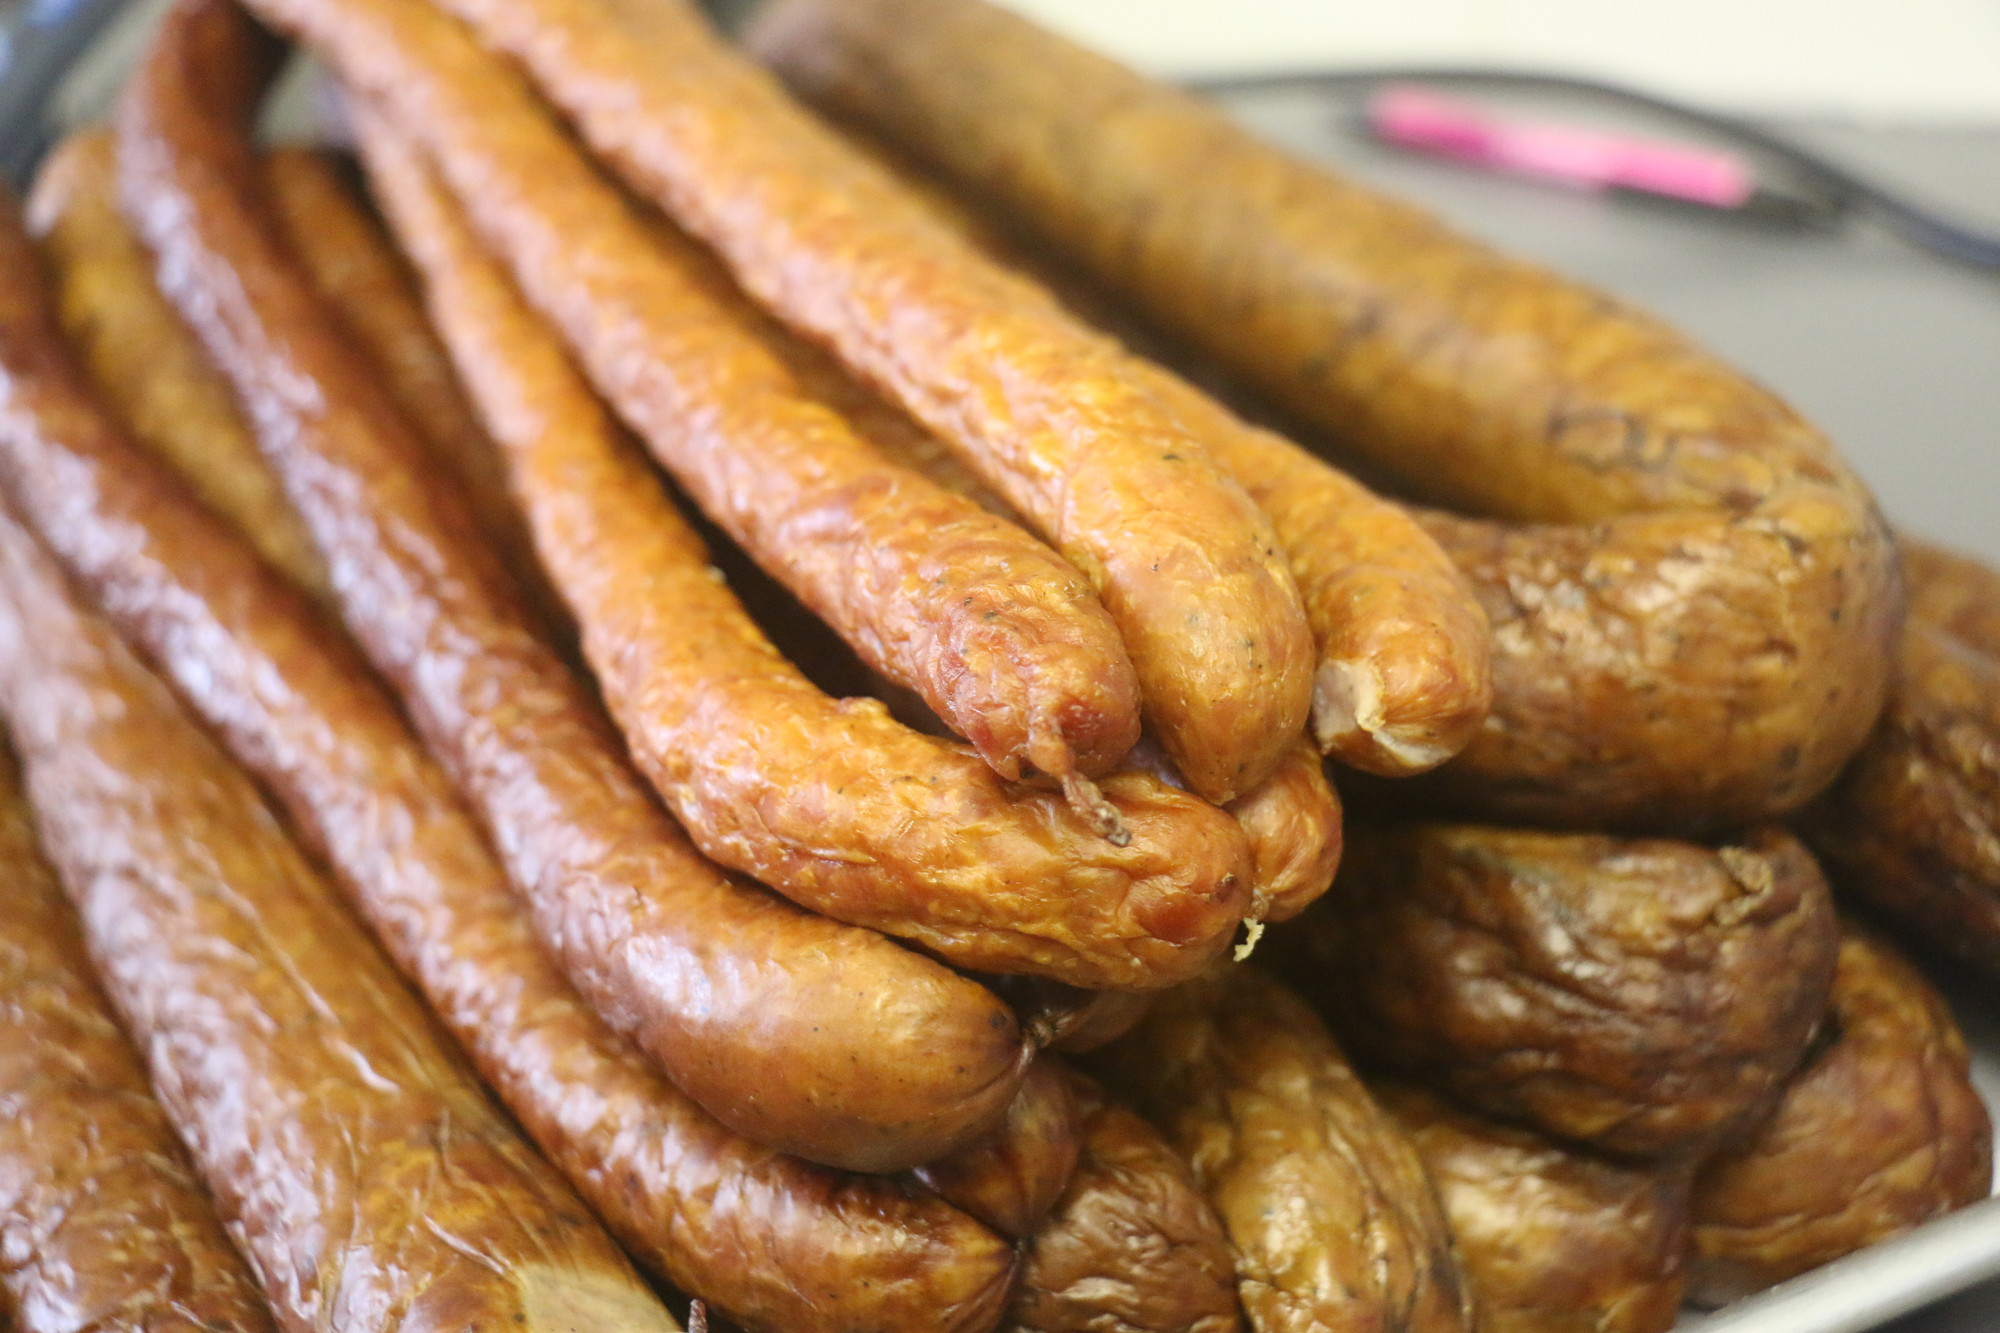 Varieties of Polish kielbasa are some of the deli’s most popular items.